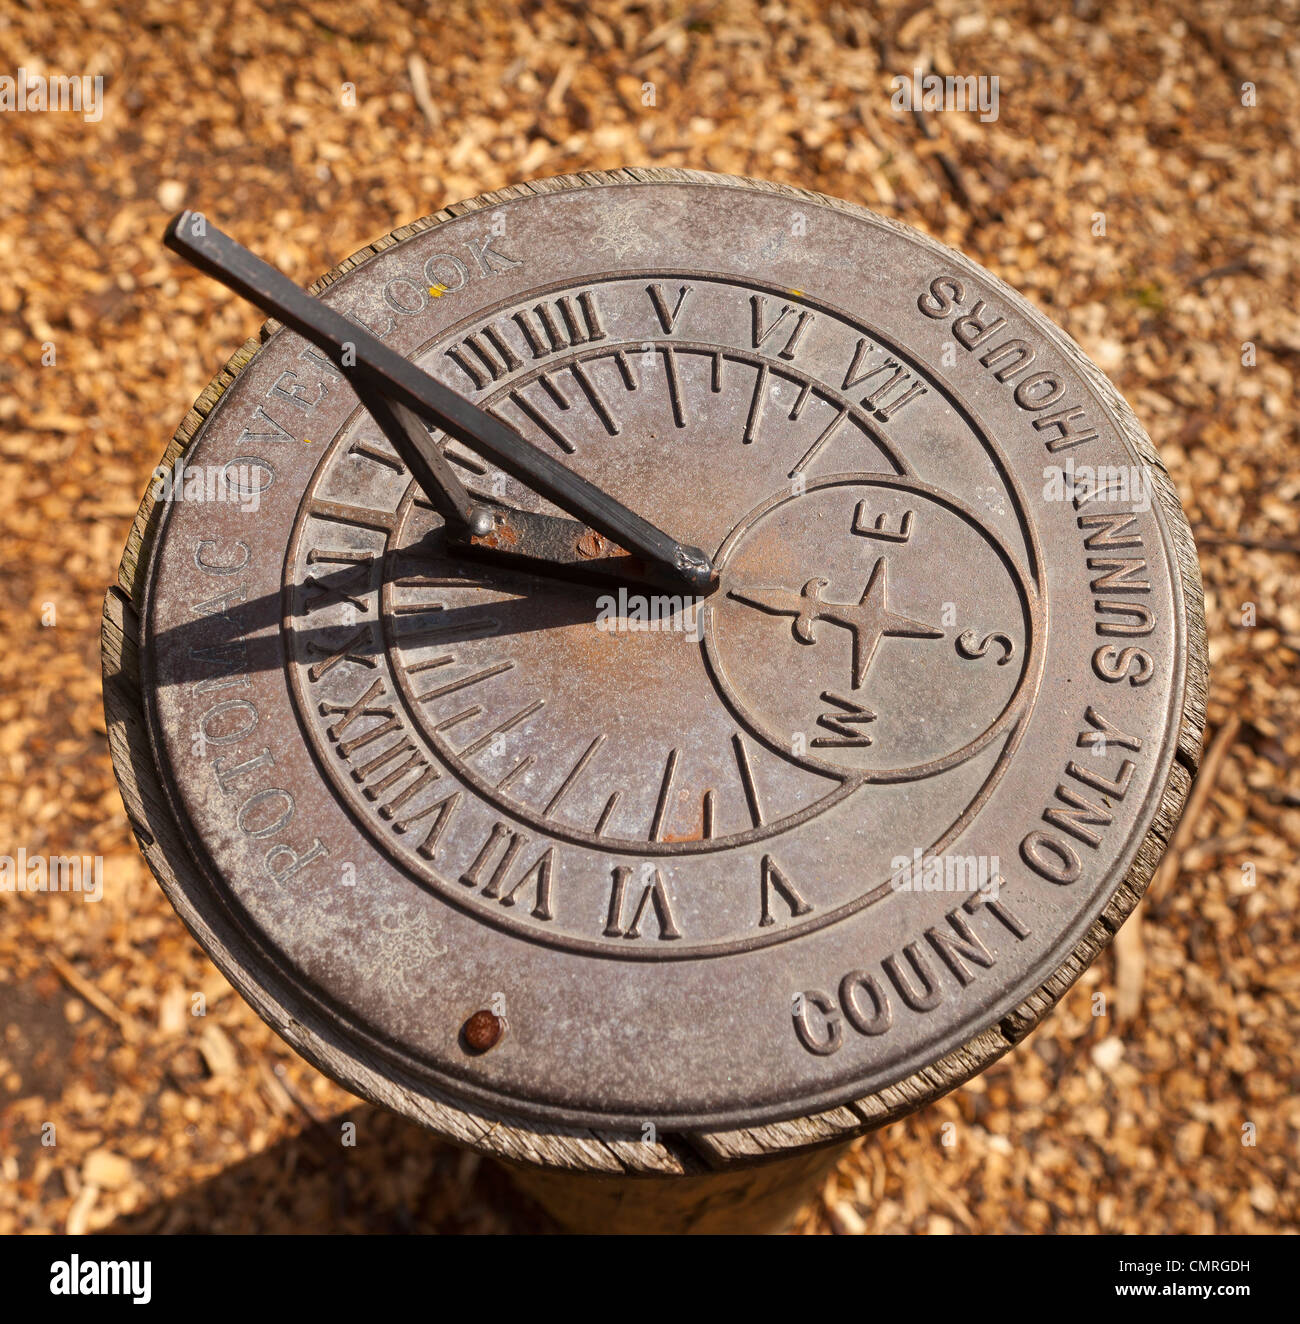 Reloj solar imagen de archivo. Imagen de hora, solar - 13483843